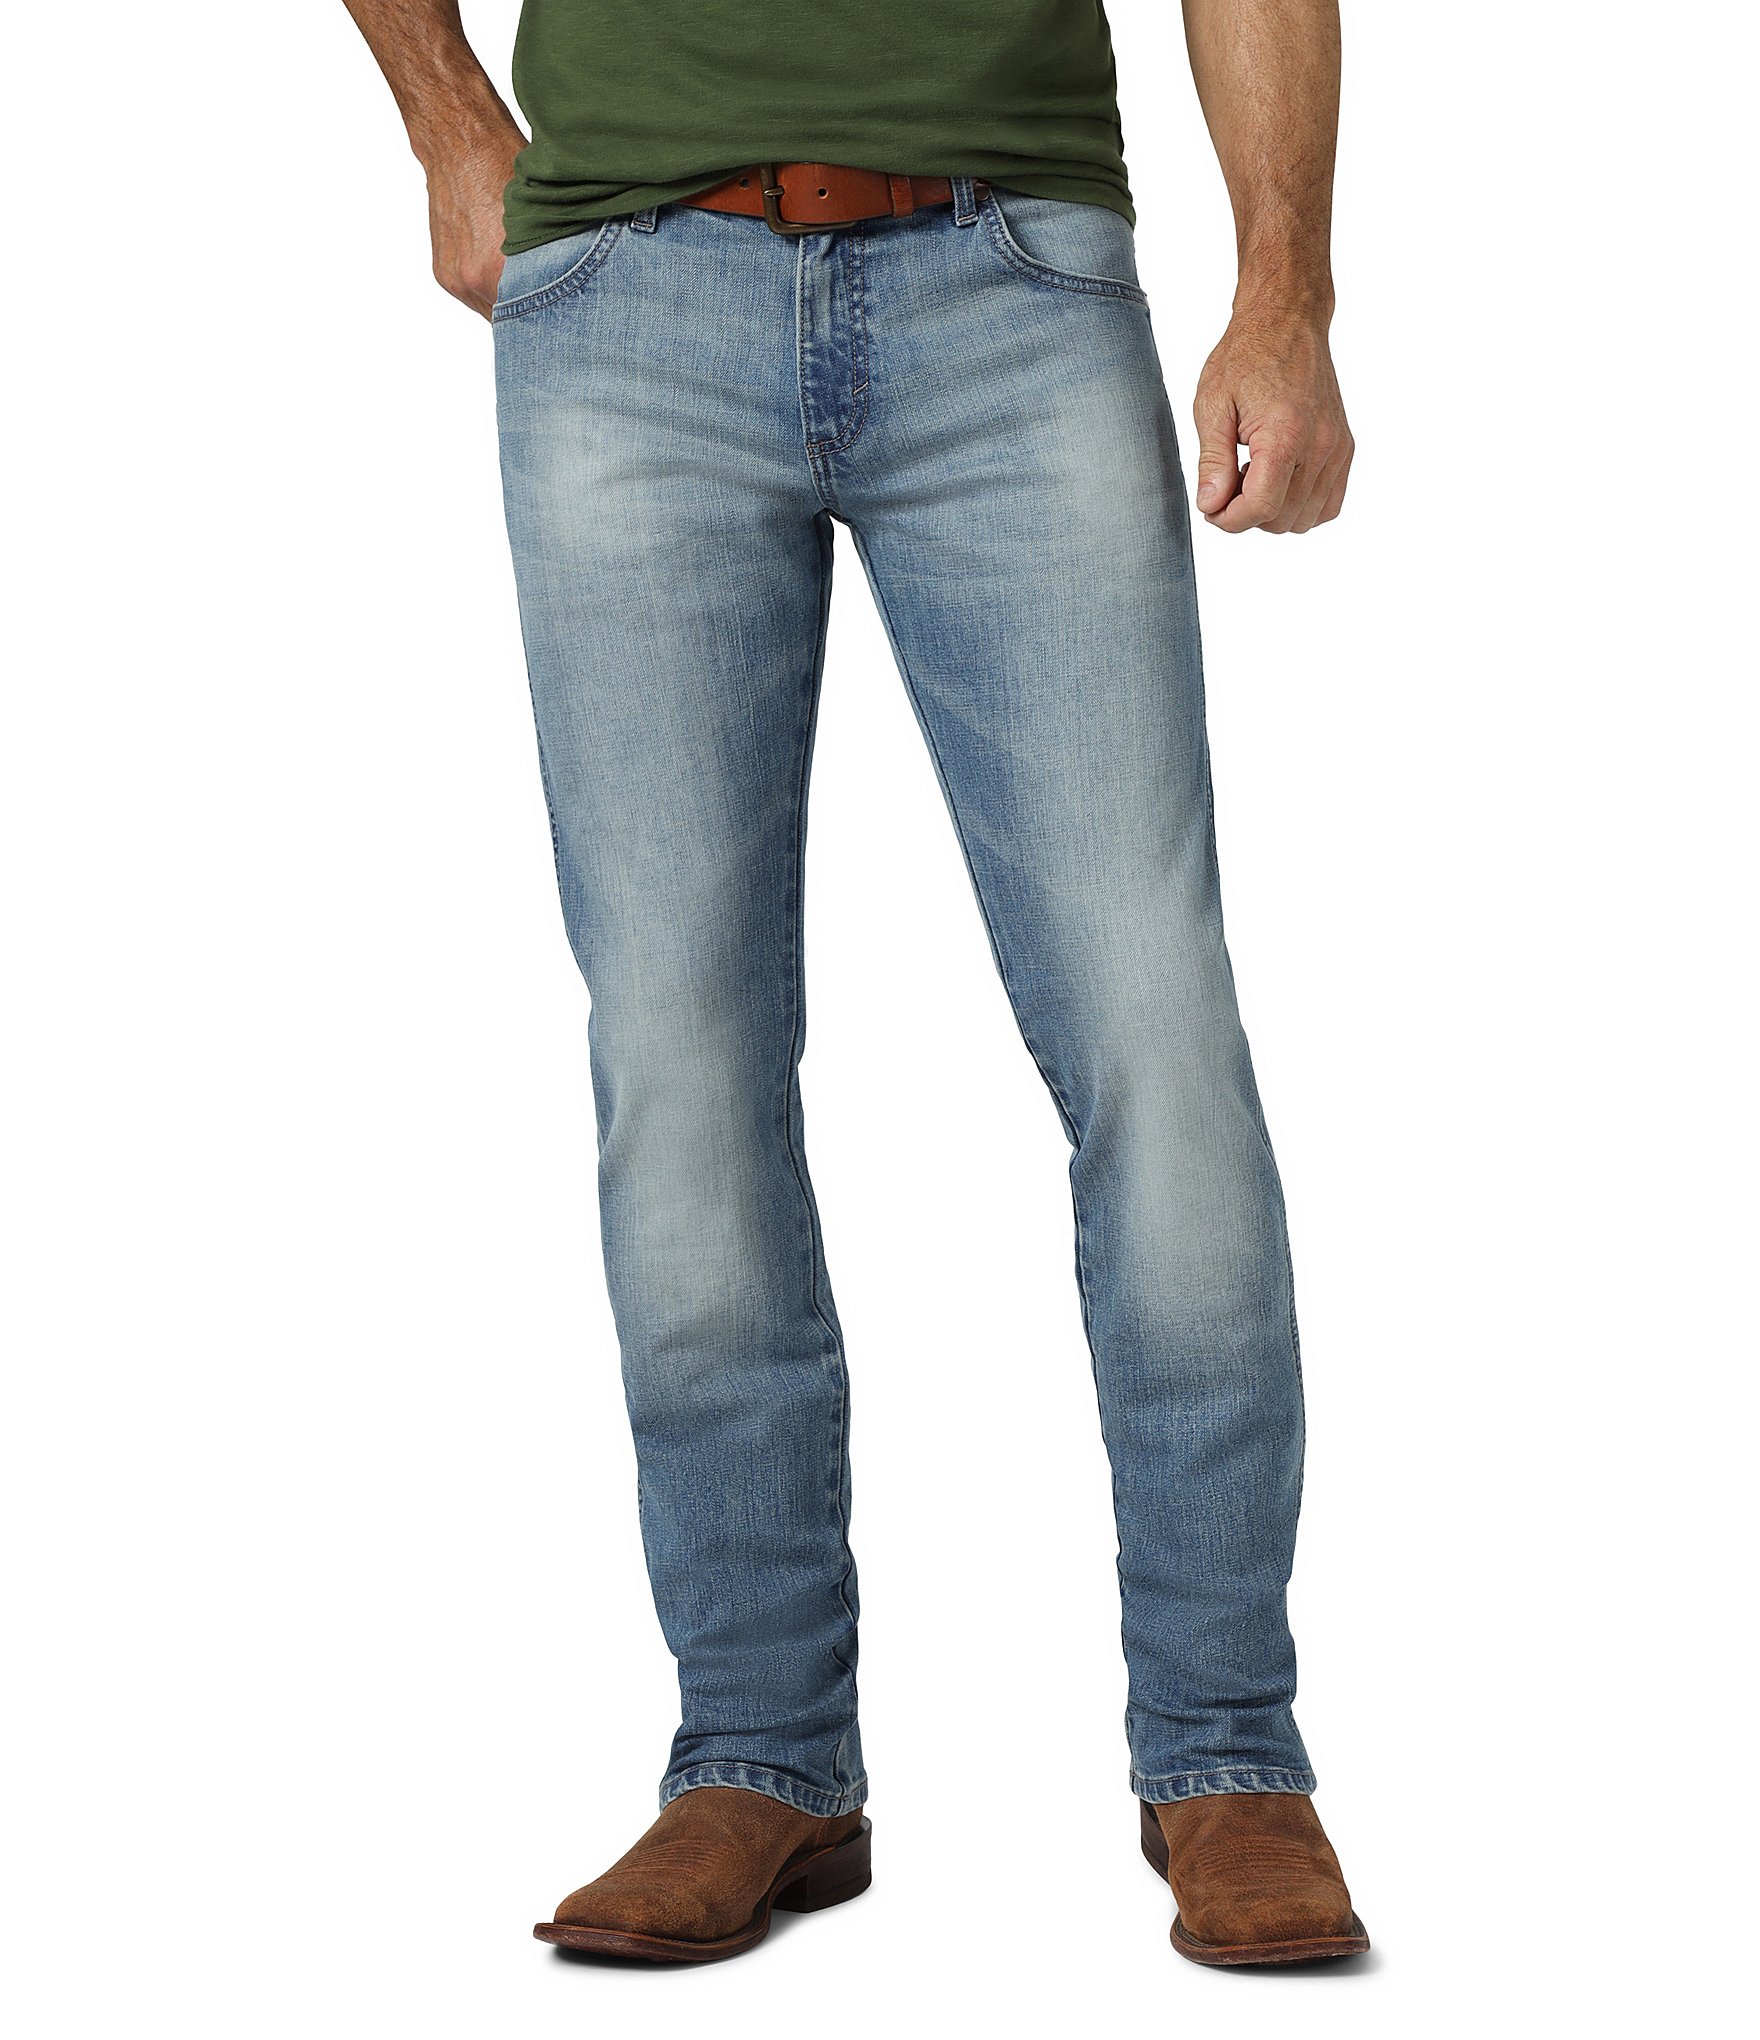 Wrangler Men's Retro Slim Fit Straight Leg Jean, Cottonwood, 29x32